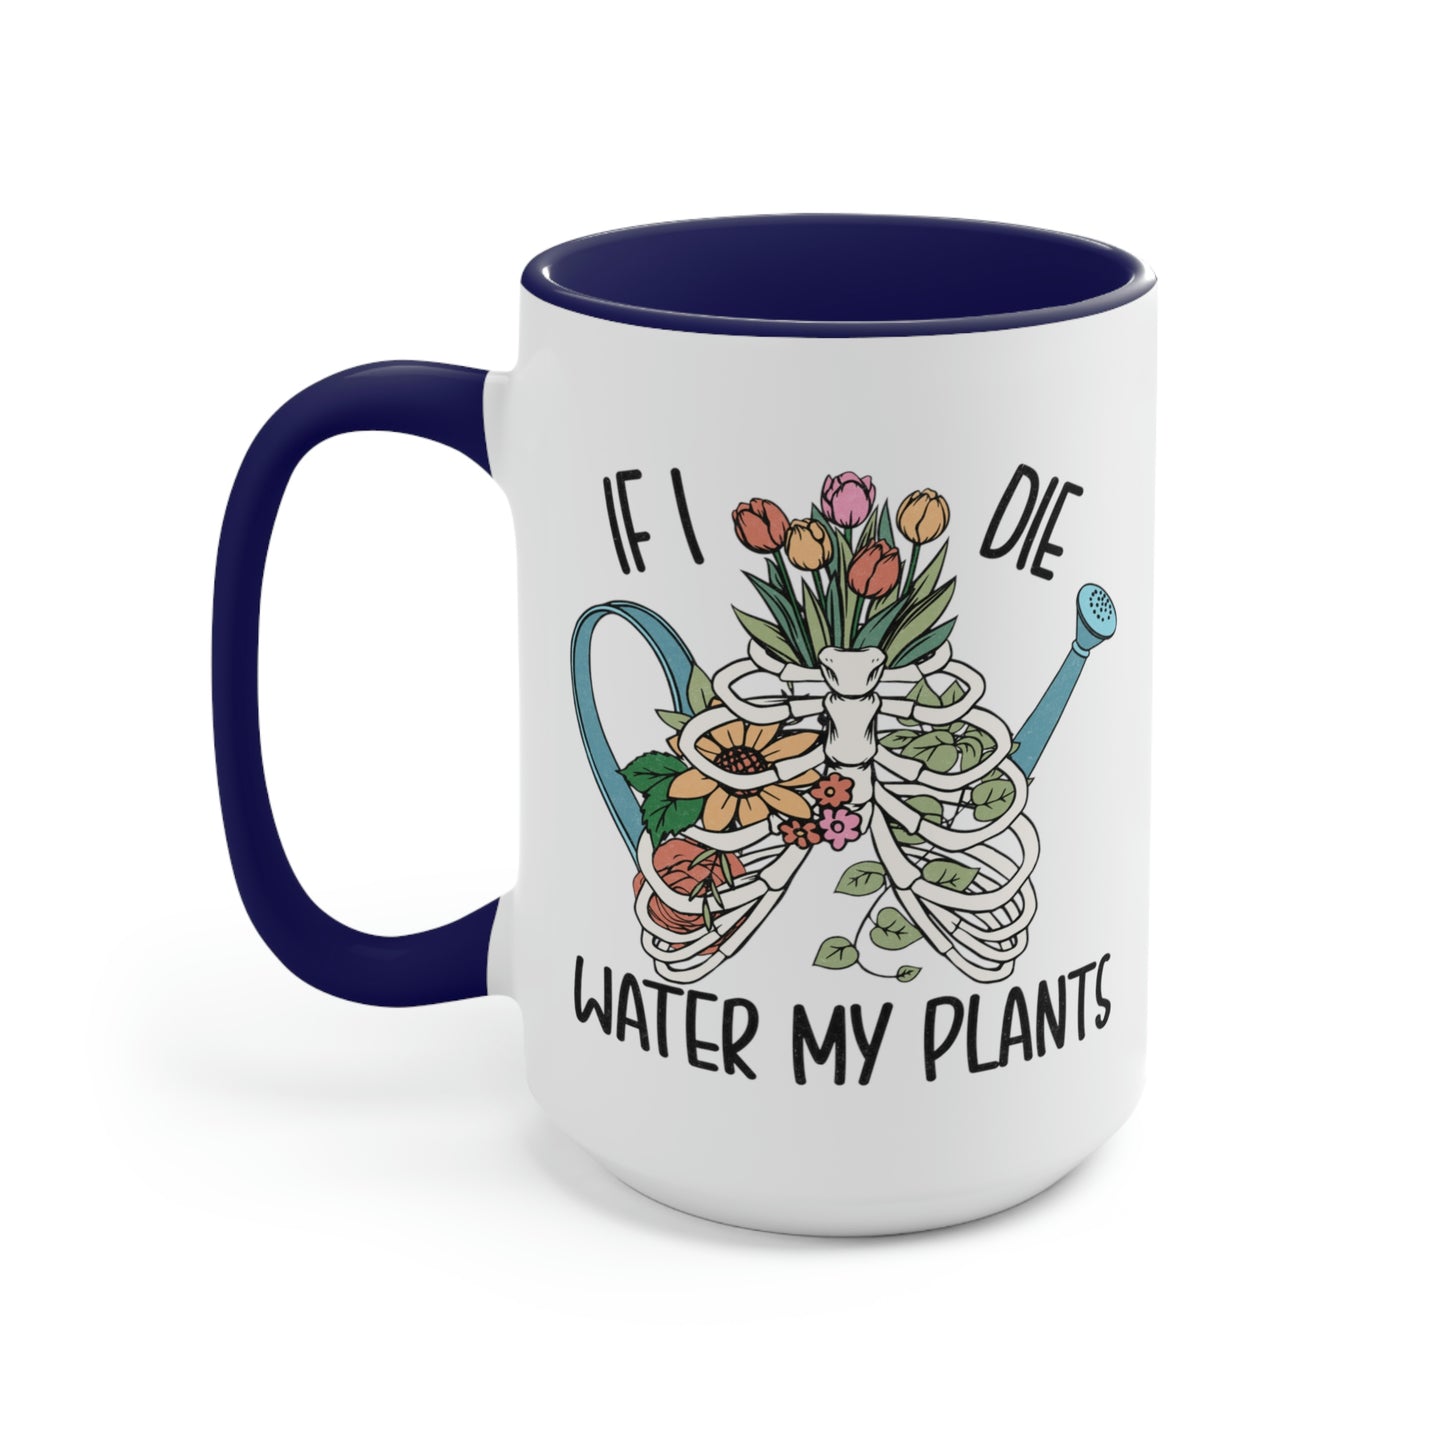 Funny plant Coffee Mugs, 15oz. If I die water my plants mug for plant lady or plant mama.